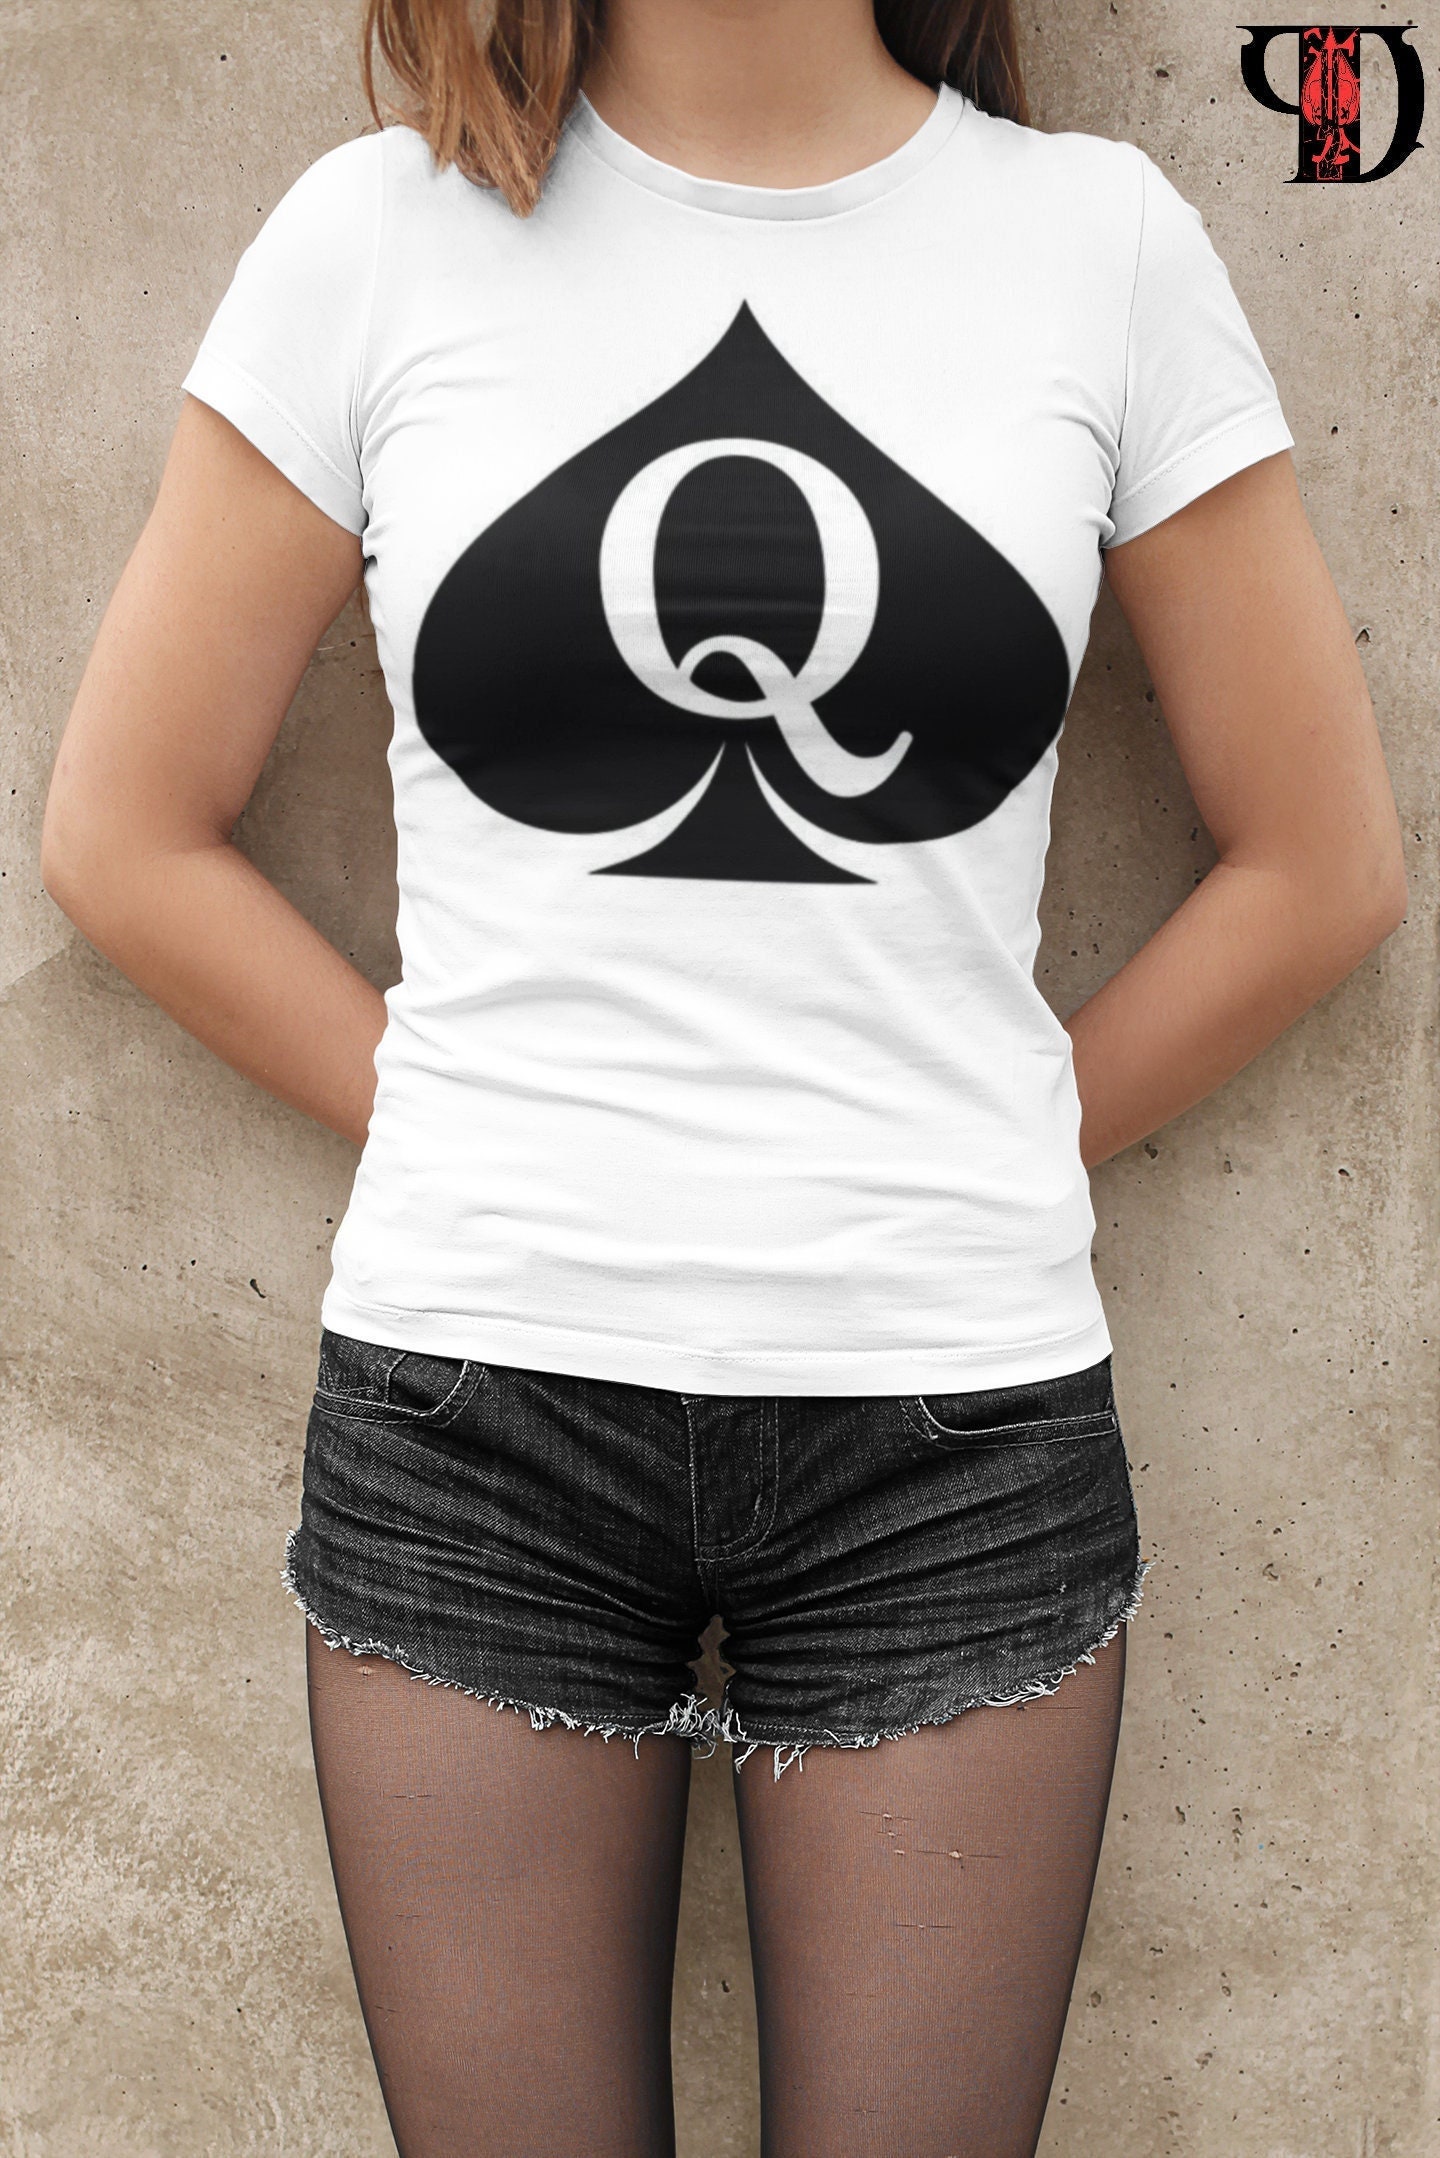 QOS T-shirt Queen of Spades BBC Shirt for the Hotwife.